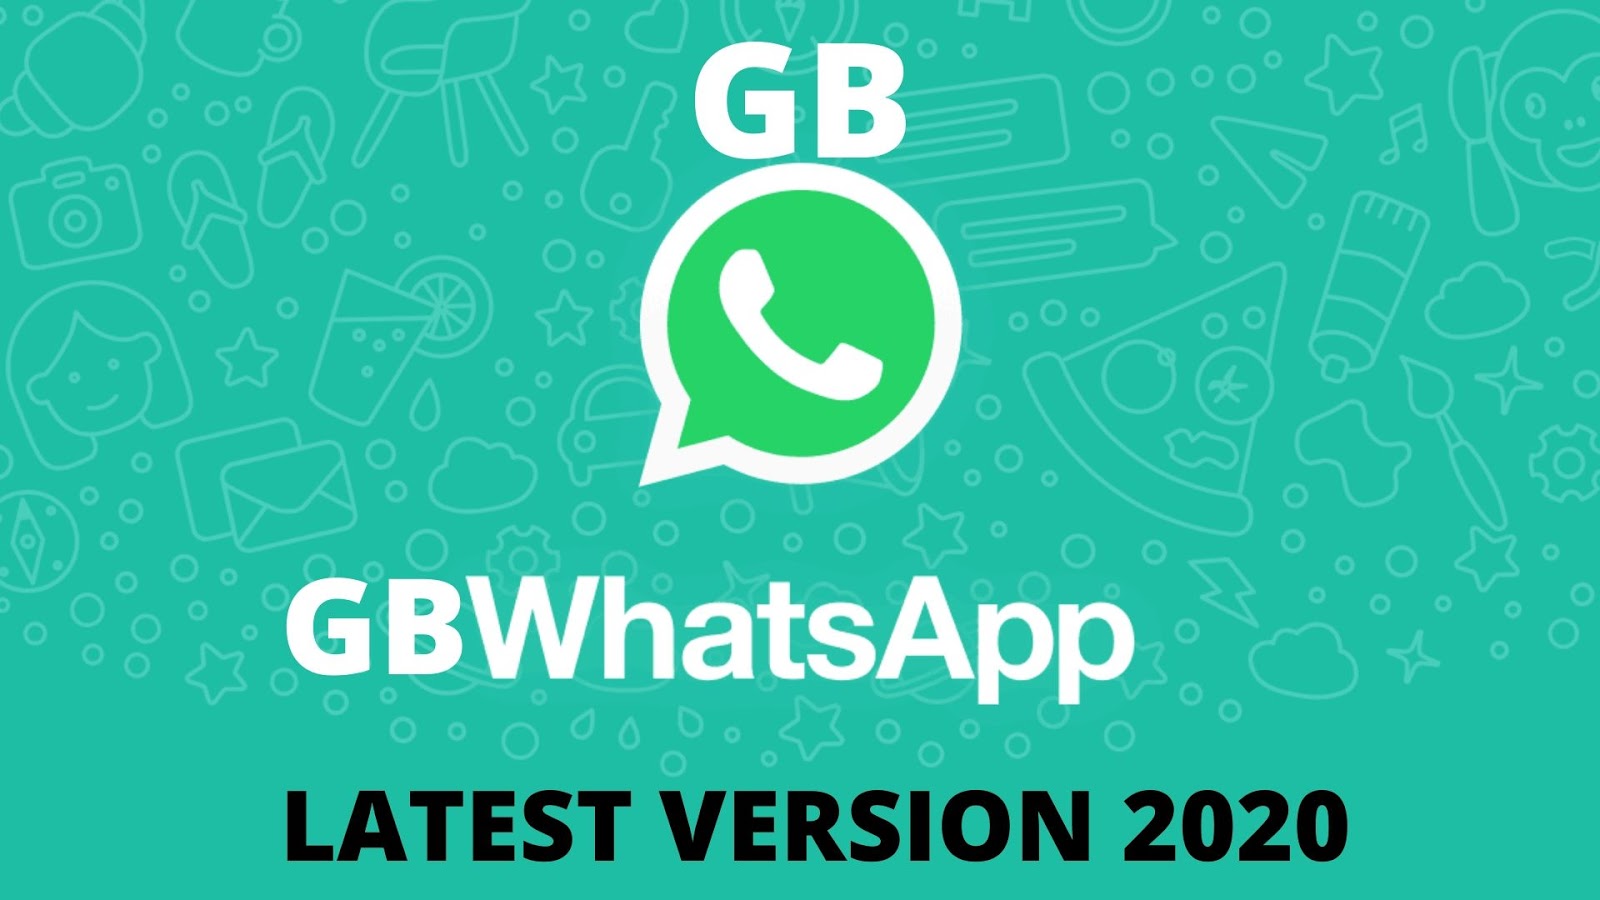 gbwhatsapp apk whatsapp download 2021